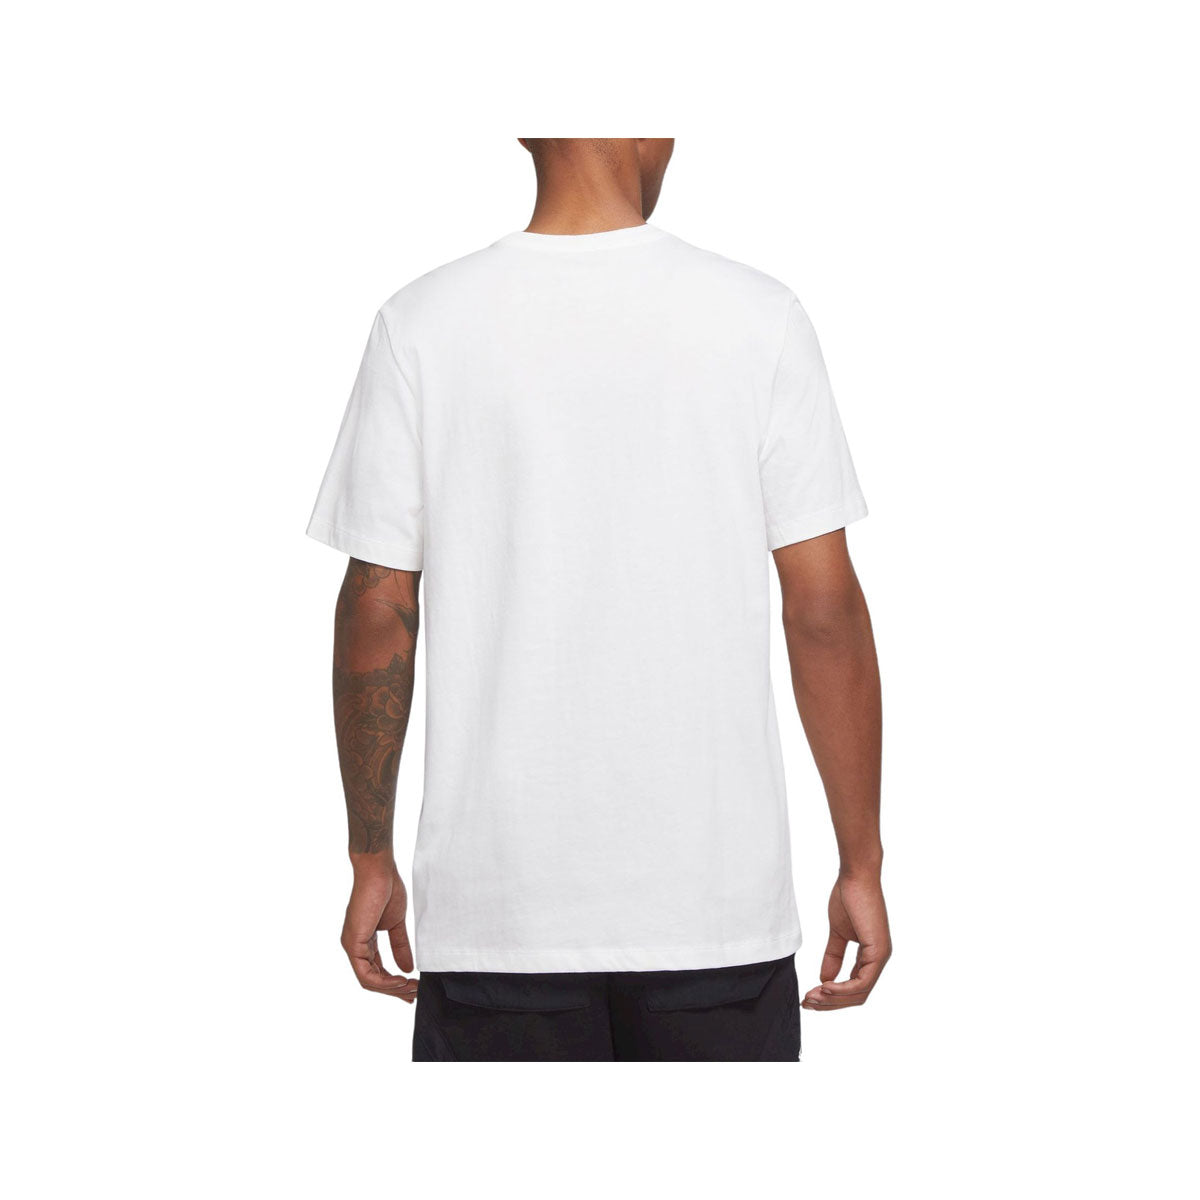 Air Jordan Men's Sorry Graphic White T-Shirt